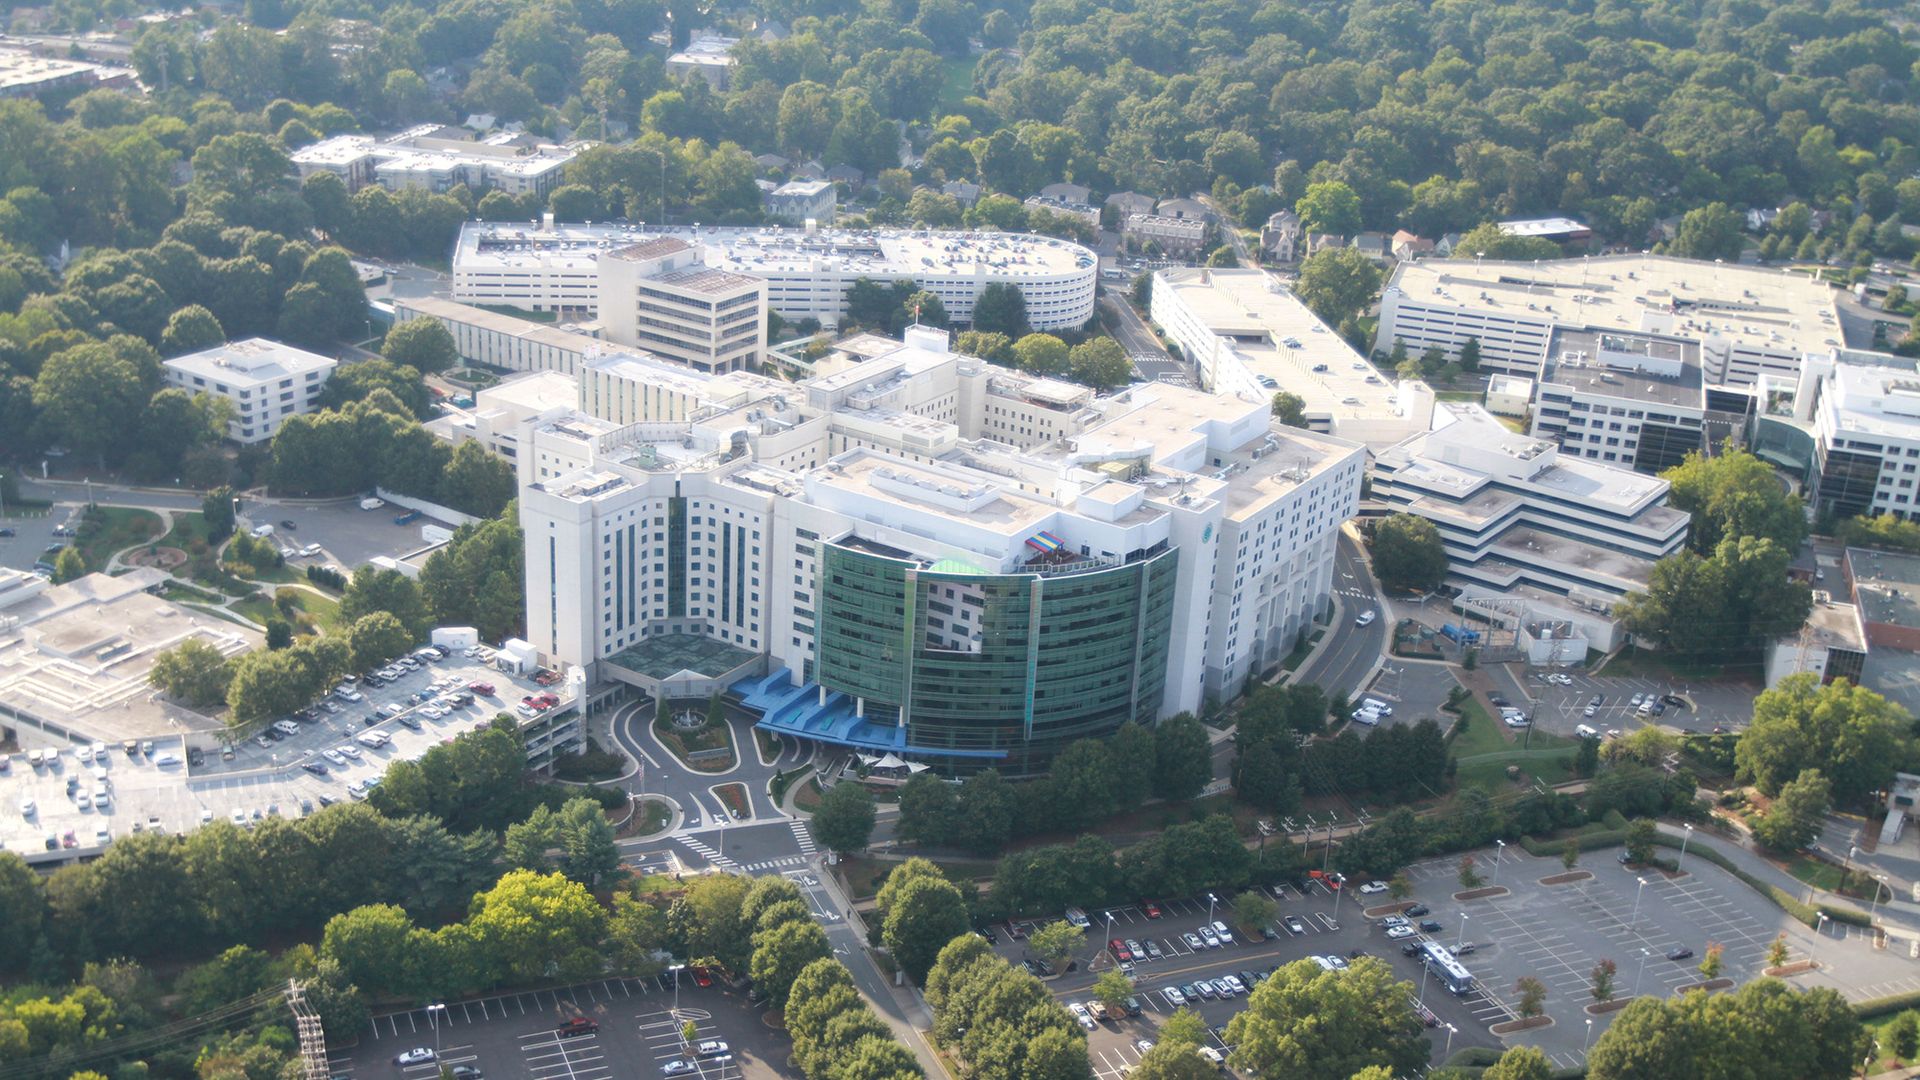 The main hospital campus of Atrium Health in North Carolina.